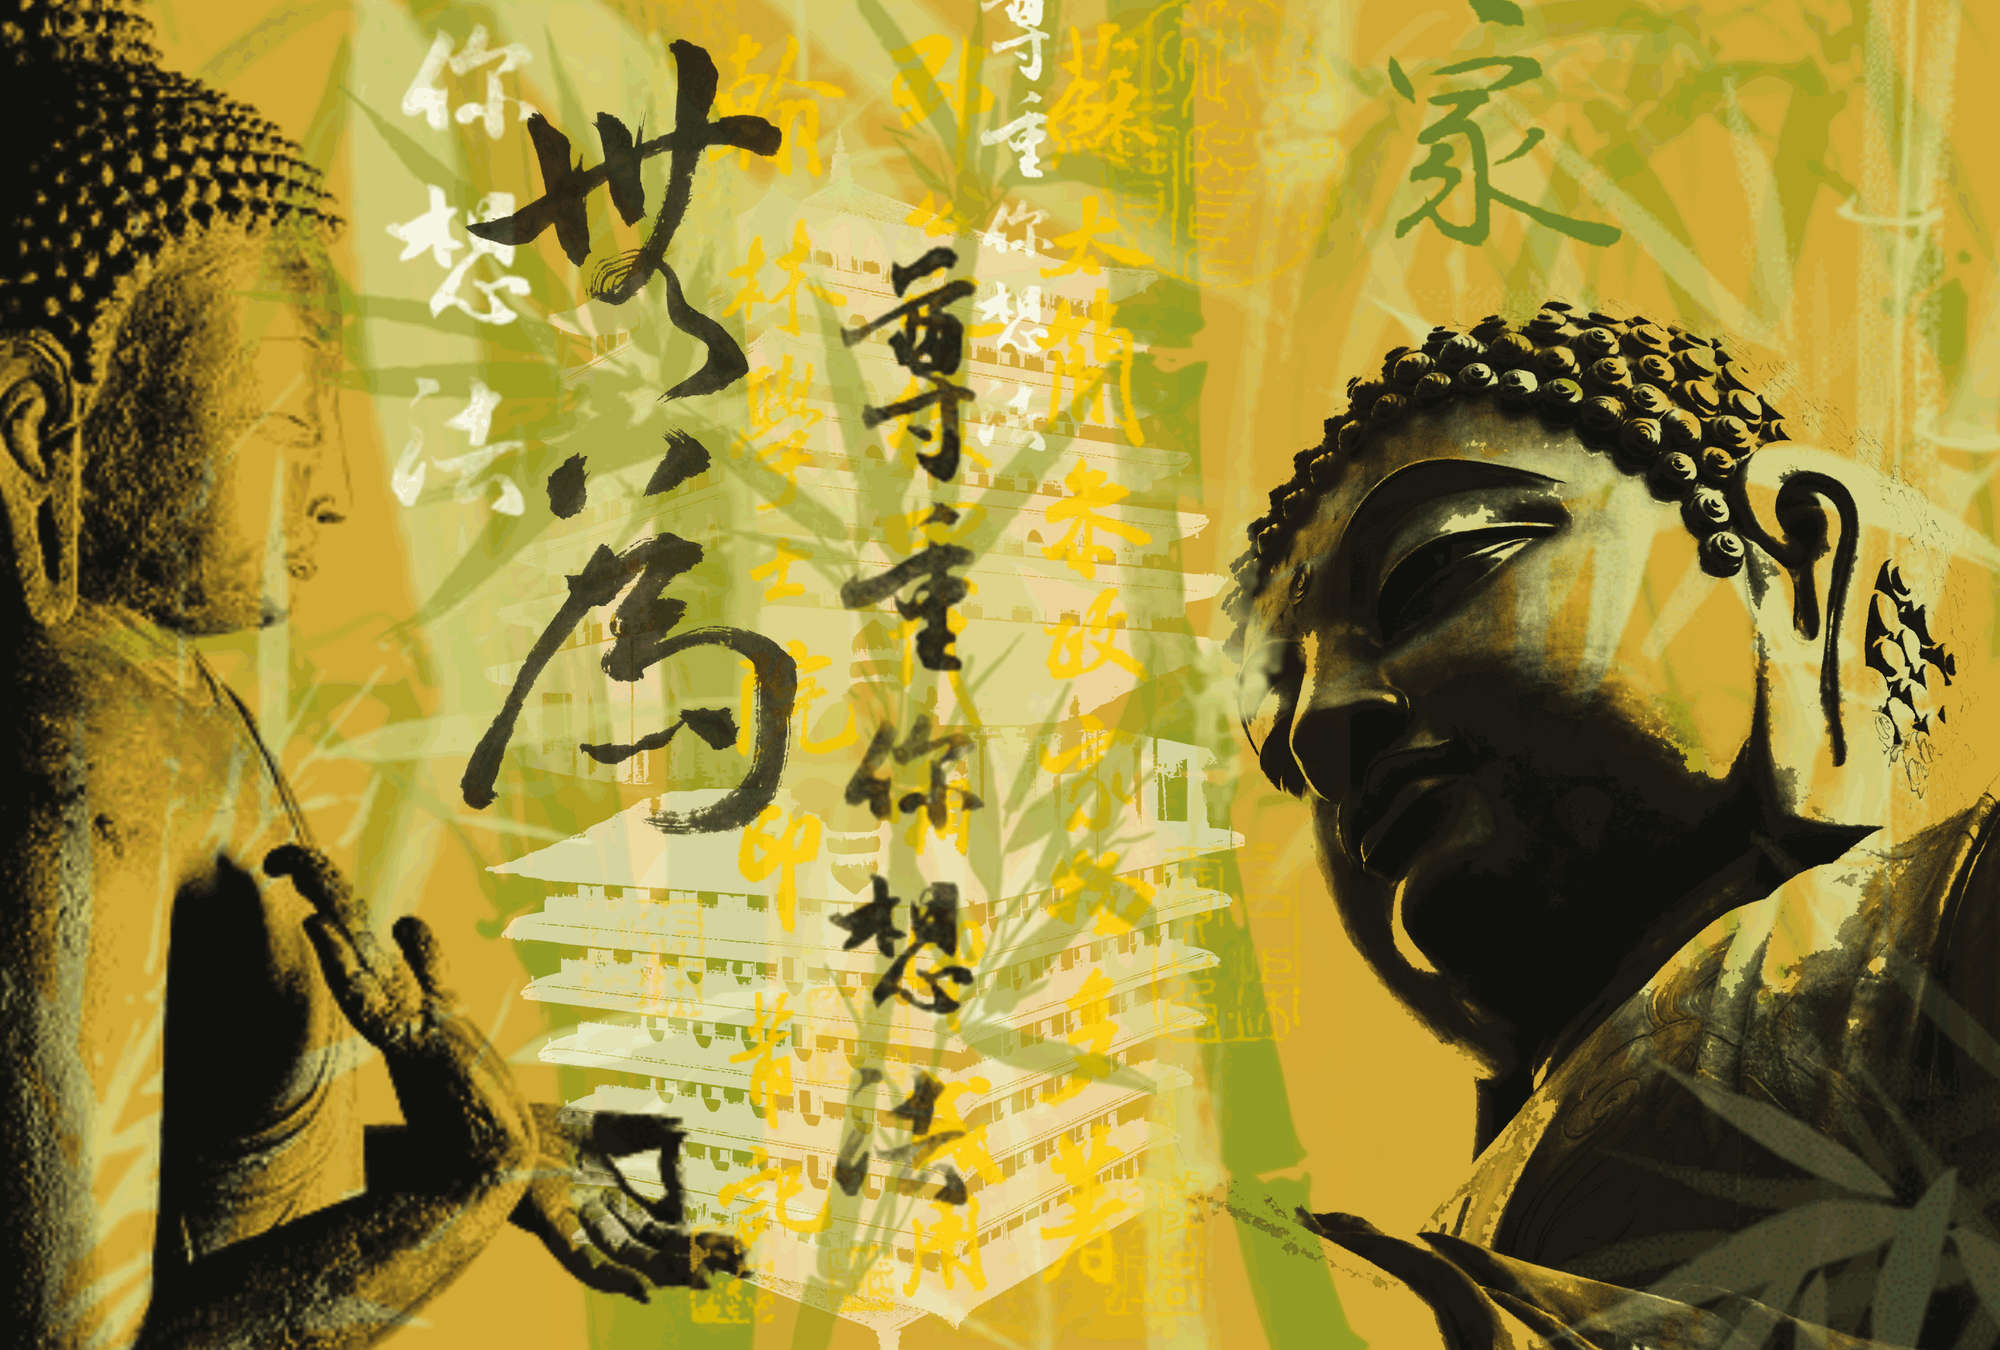             Buddha mural Asian Fusion Style
        